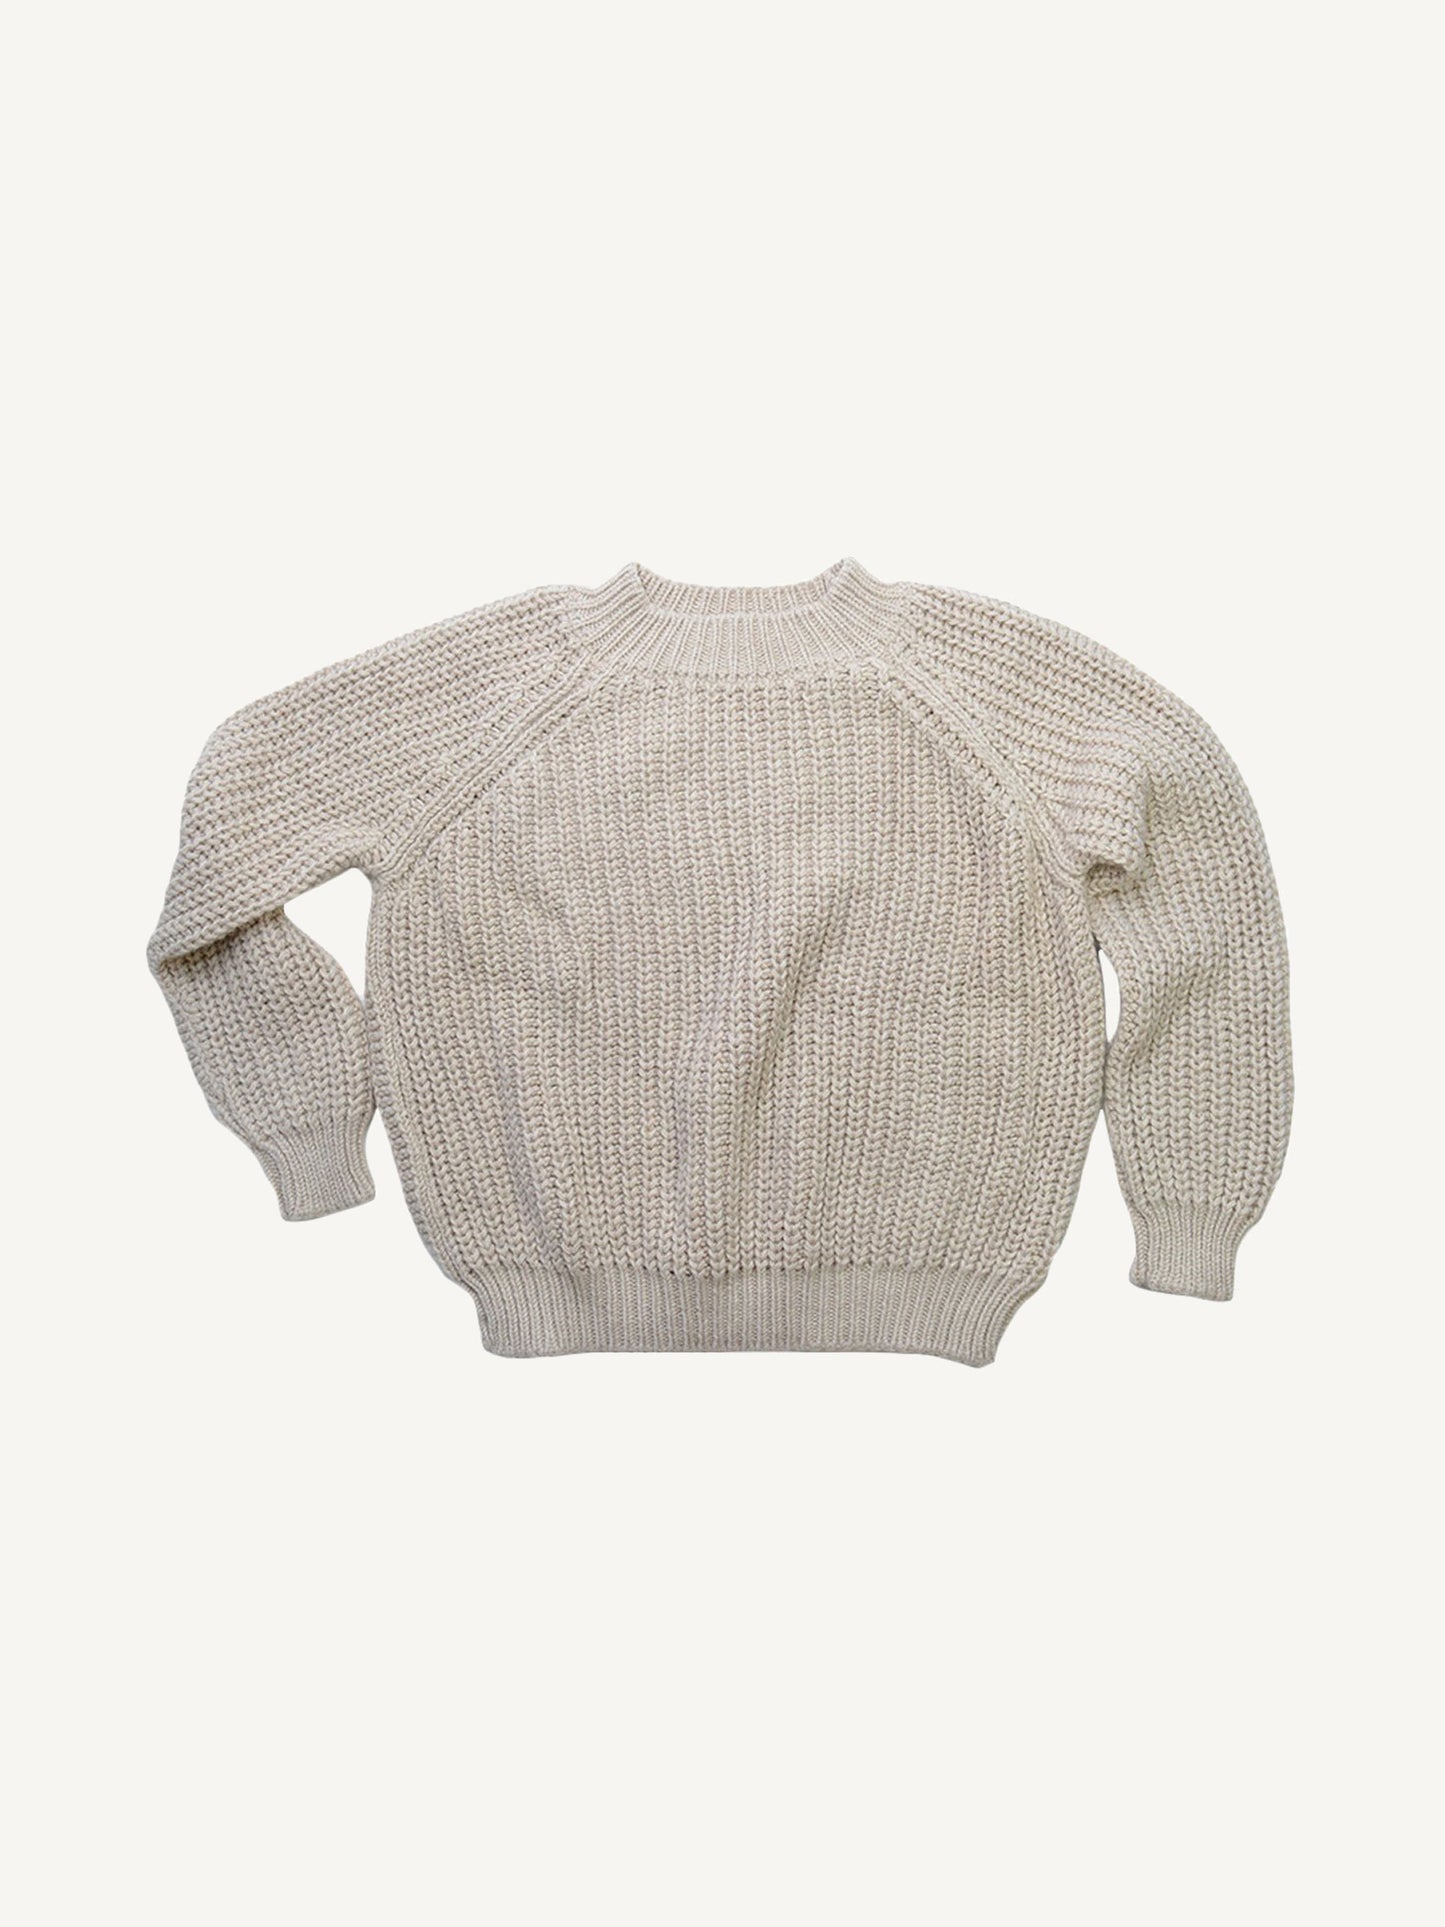 Adult's Fishline Sweater Oatmeal